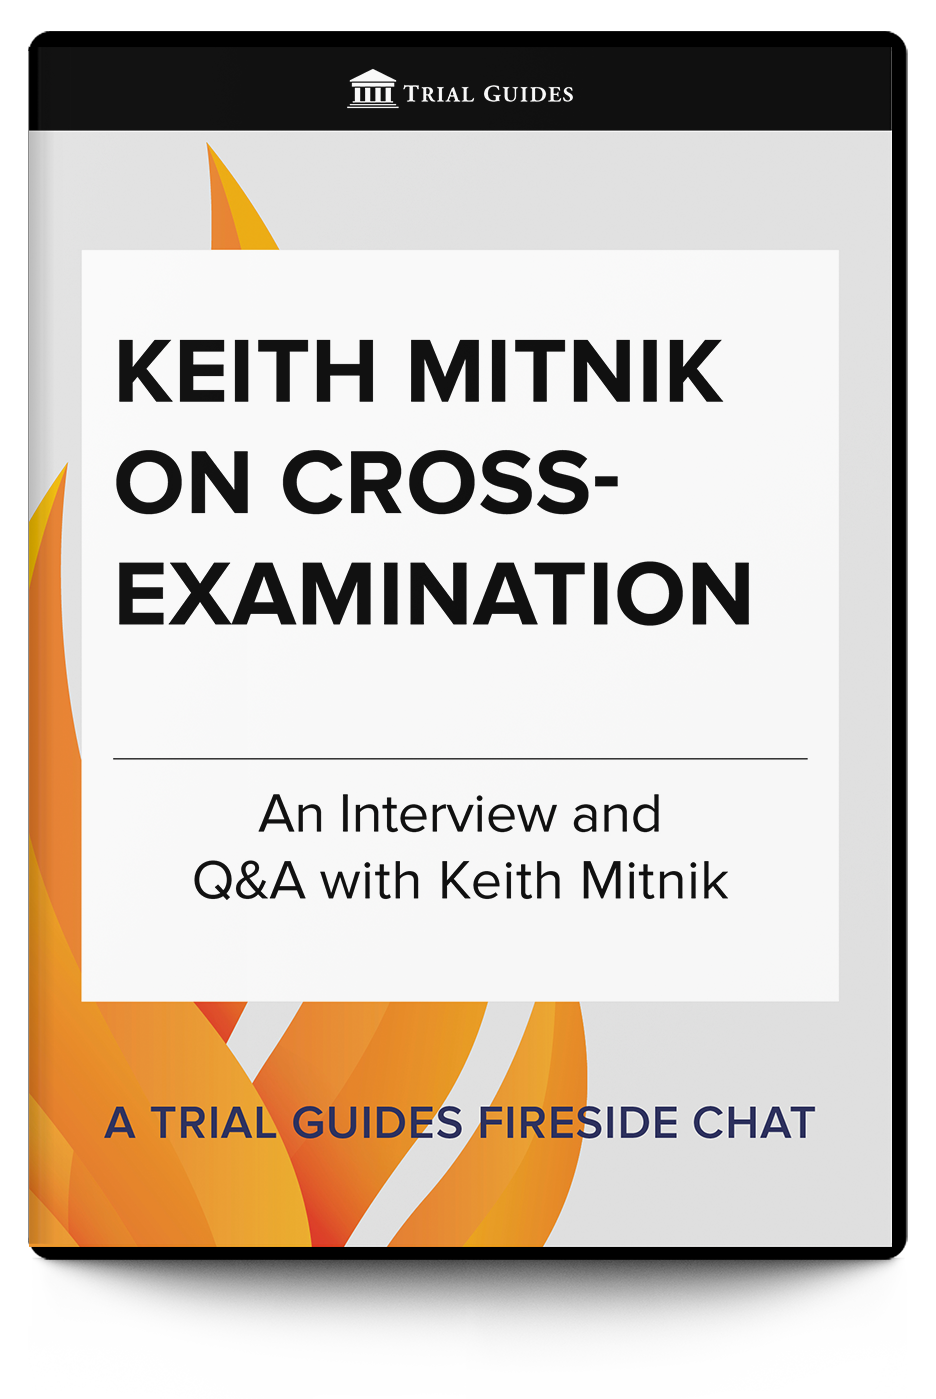 Keith Mitnik on Cross-Examination